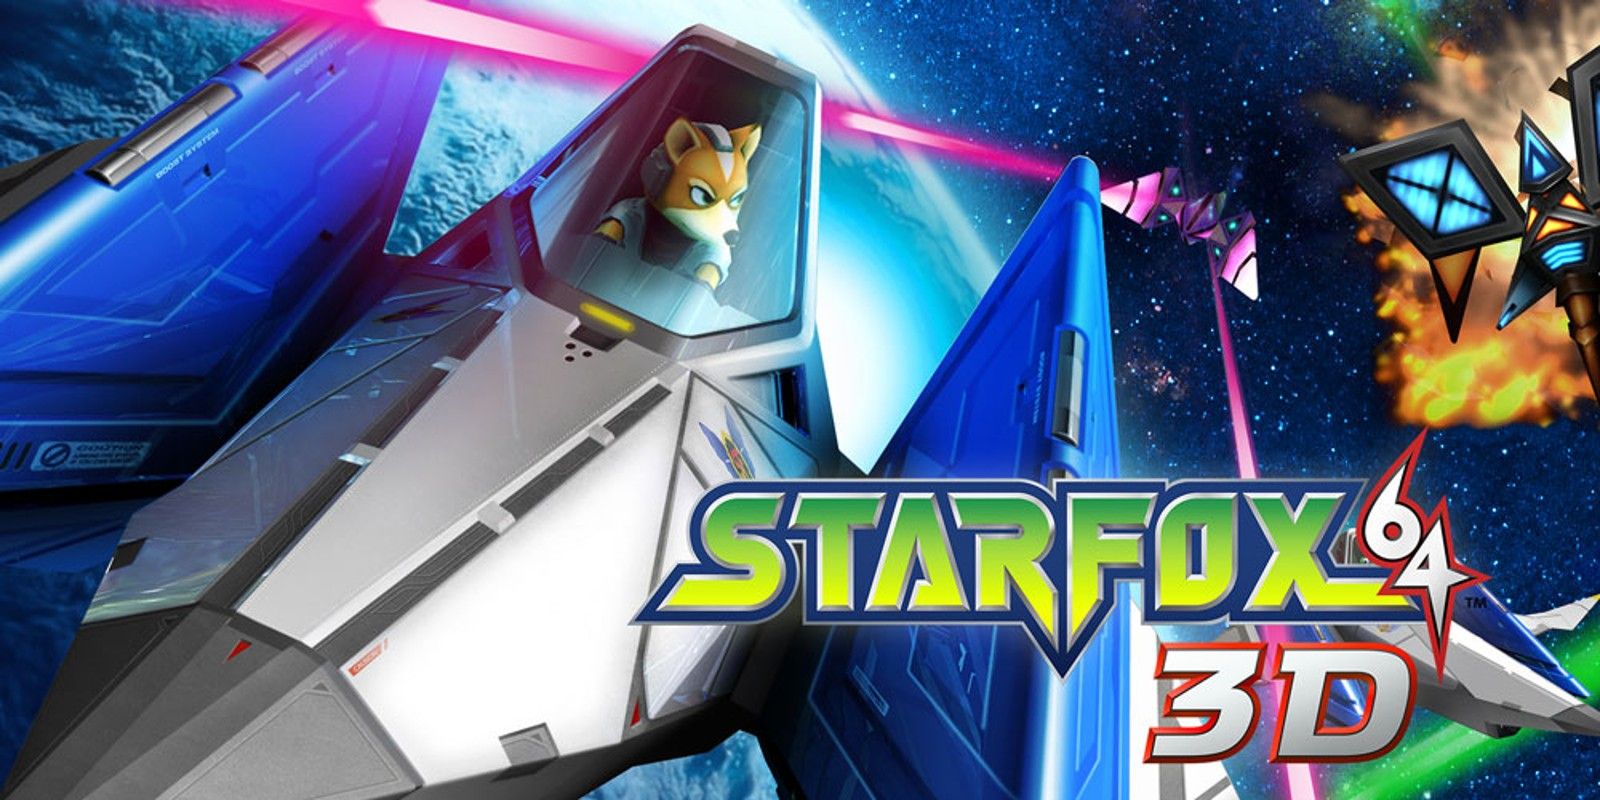 The official Star Fox 64 3D Nintendo UK image